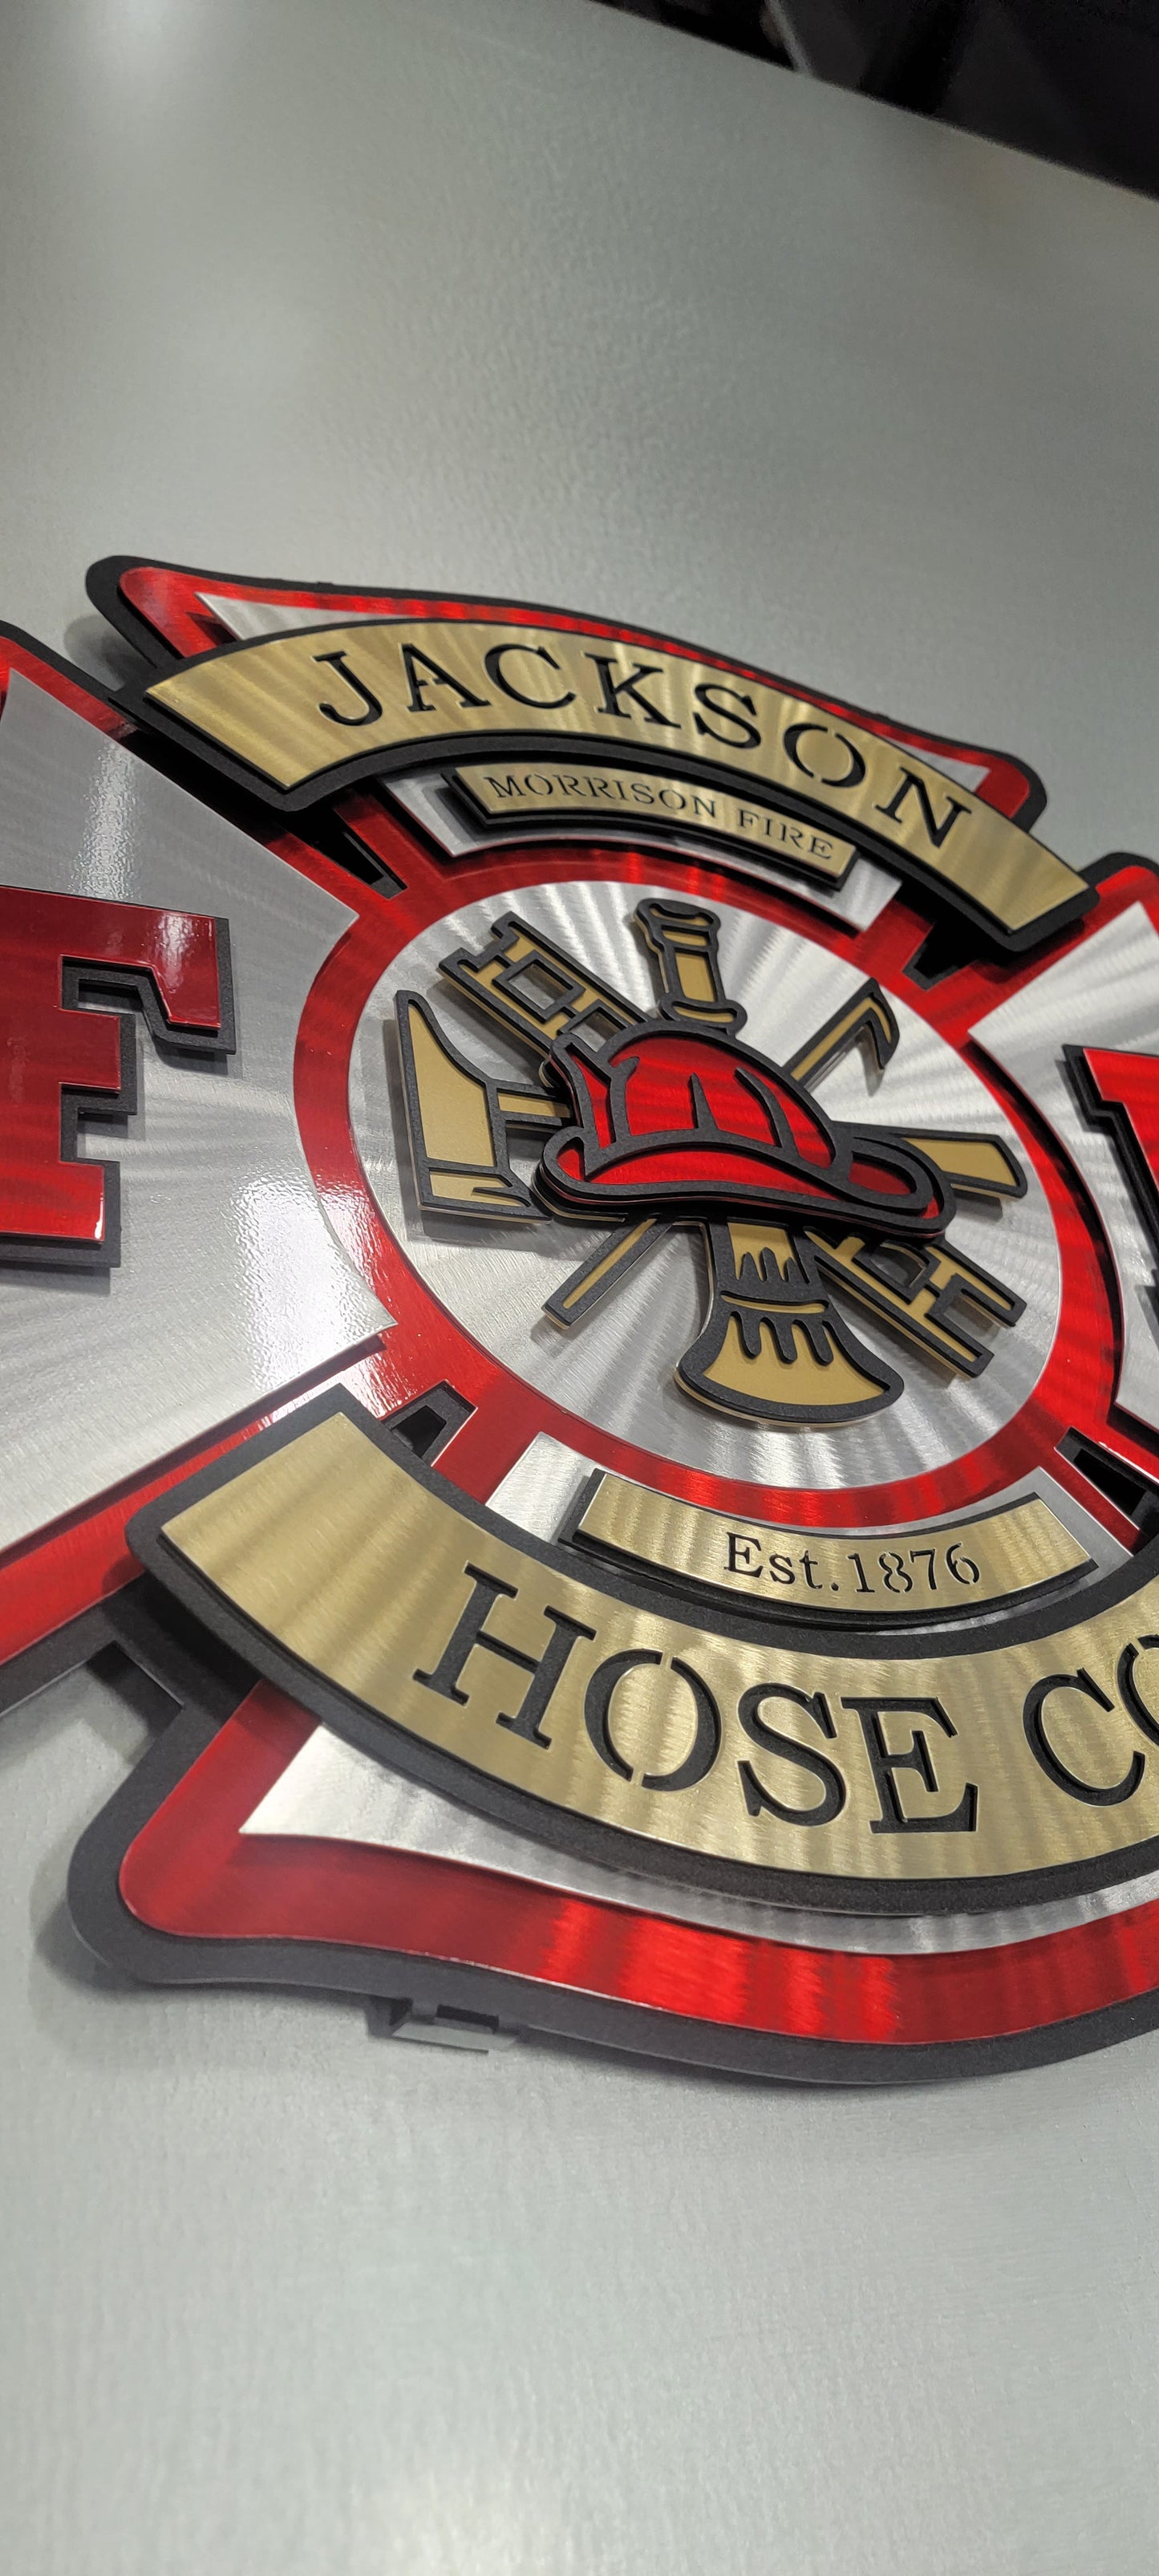 Jackson Hose CO. Morrison Fire